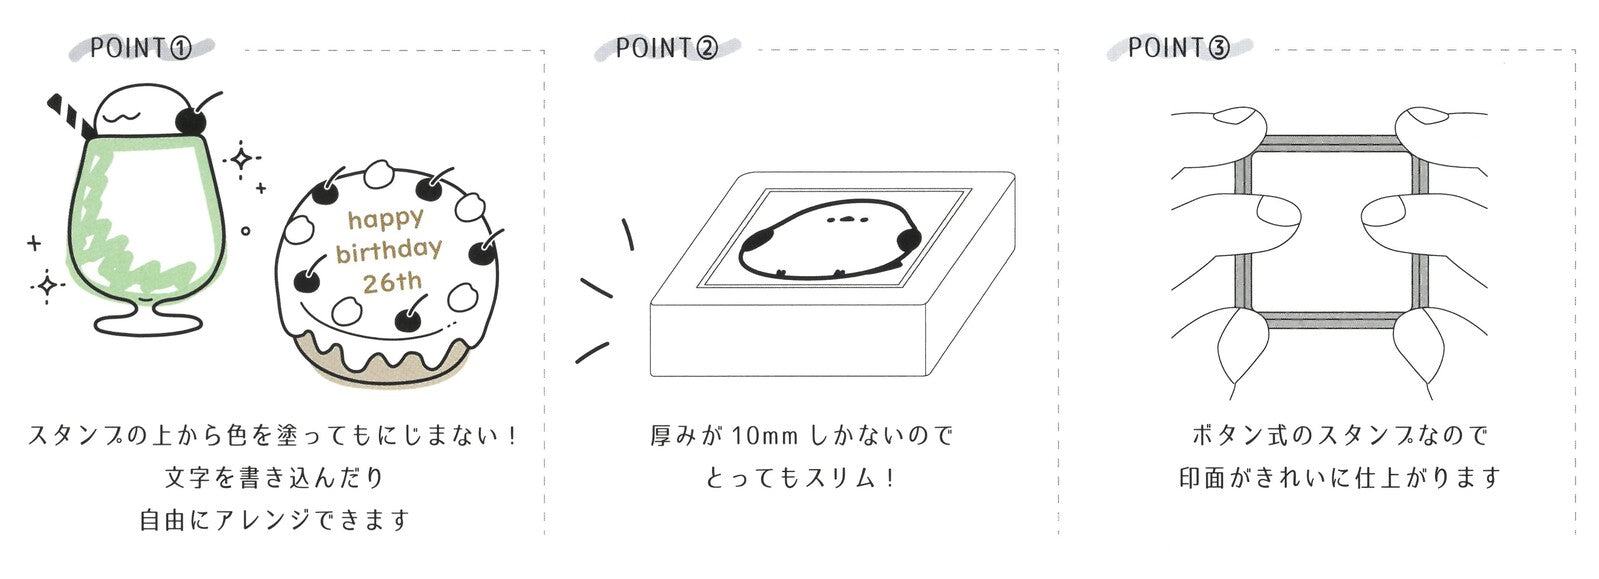 PiTAOSHI Button Type Penetrating Stamp - Cat - Techo Treats